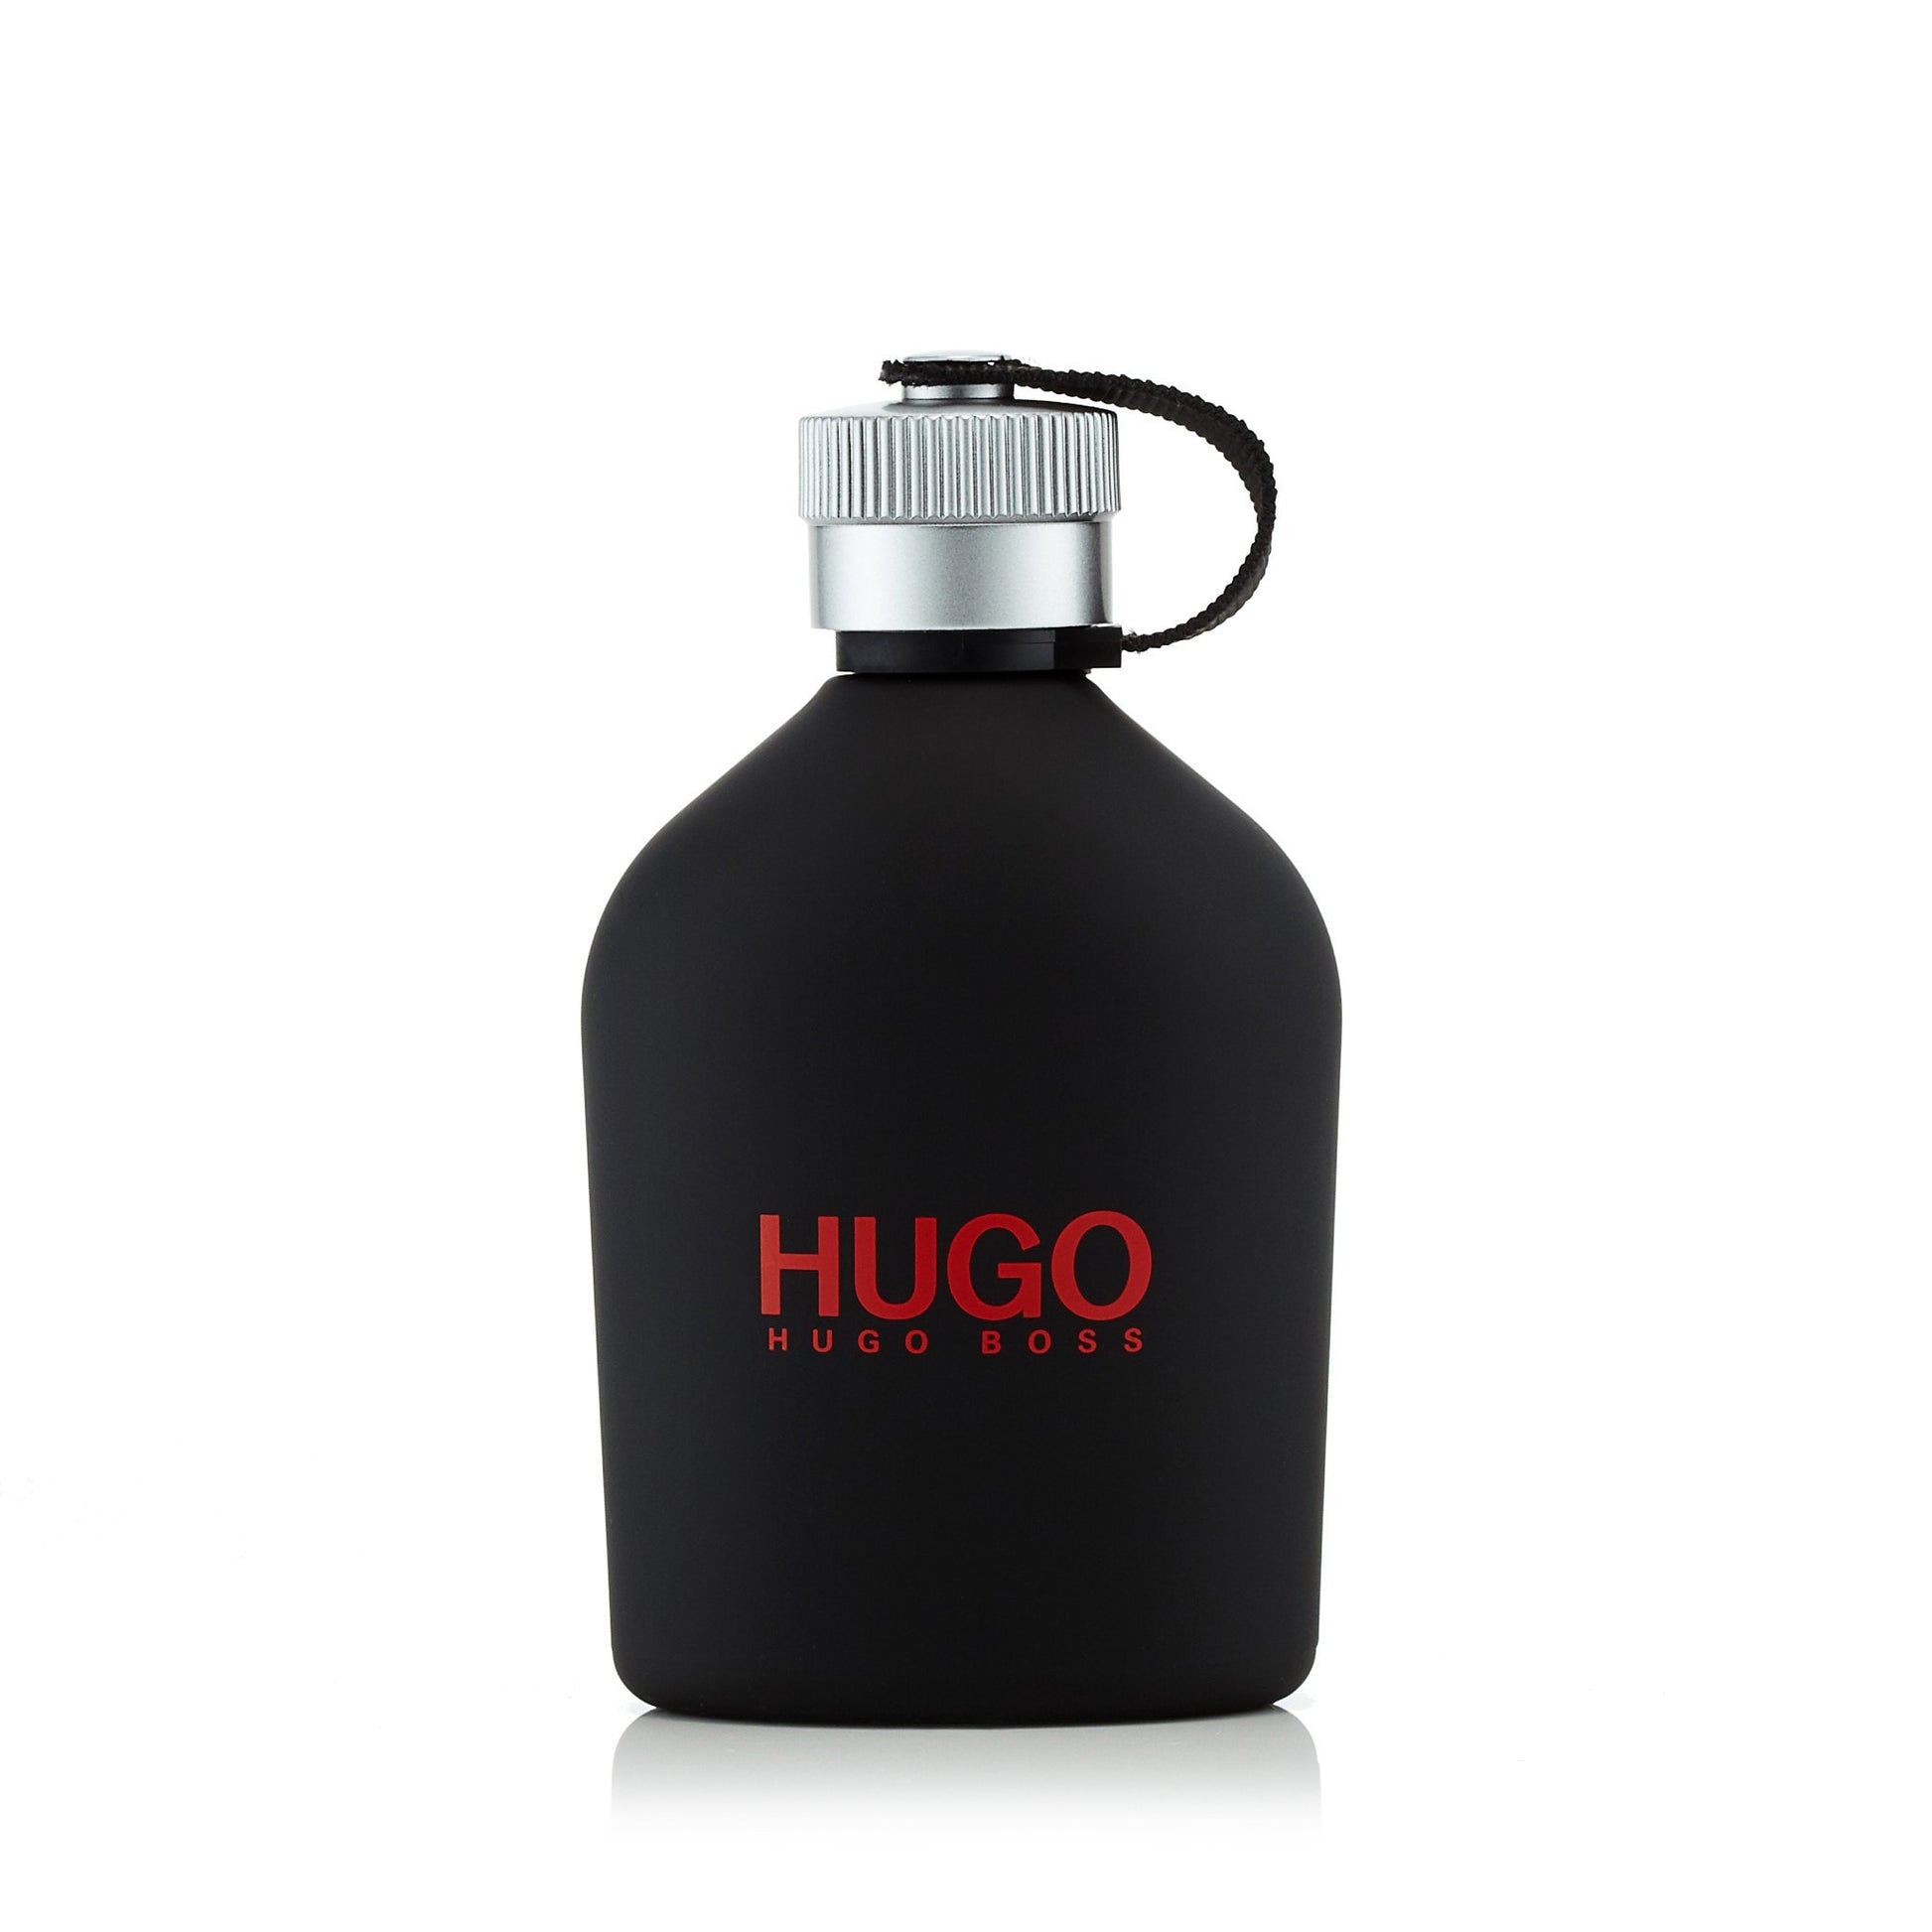 Hugo Just Different Eau de Toilette Spray for Men by Hugo Boss 6.7 oz. Click to open in modal